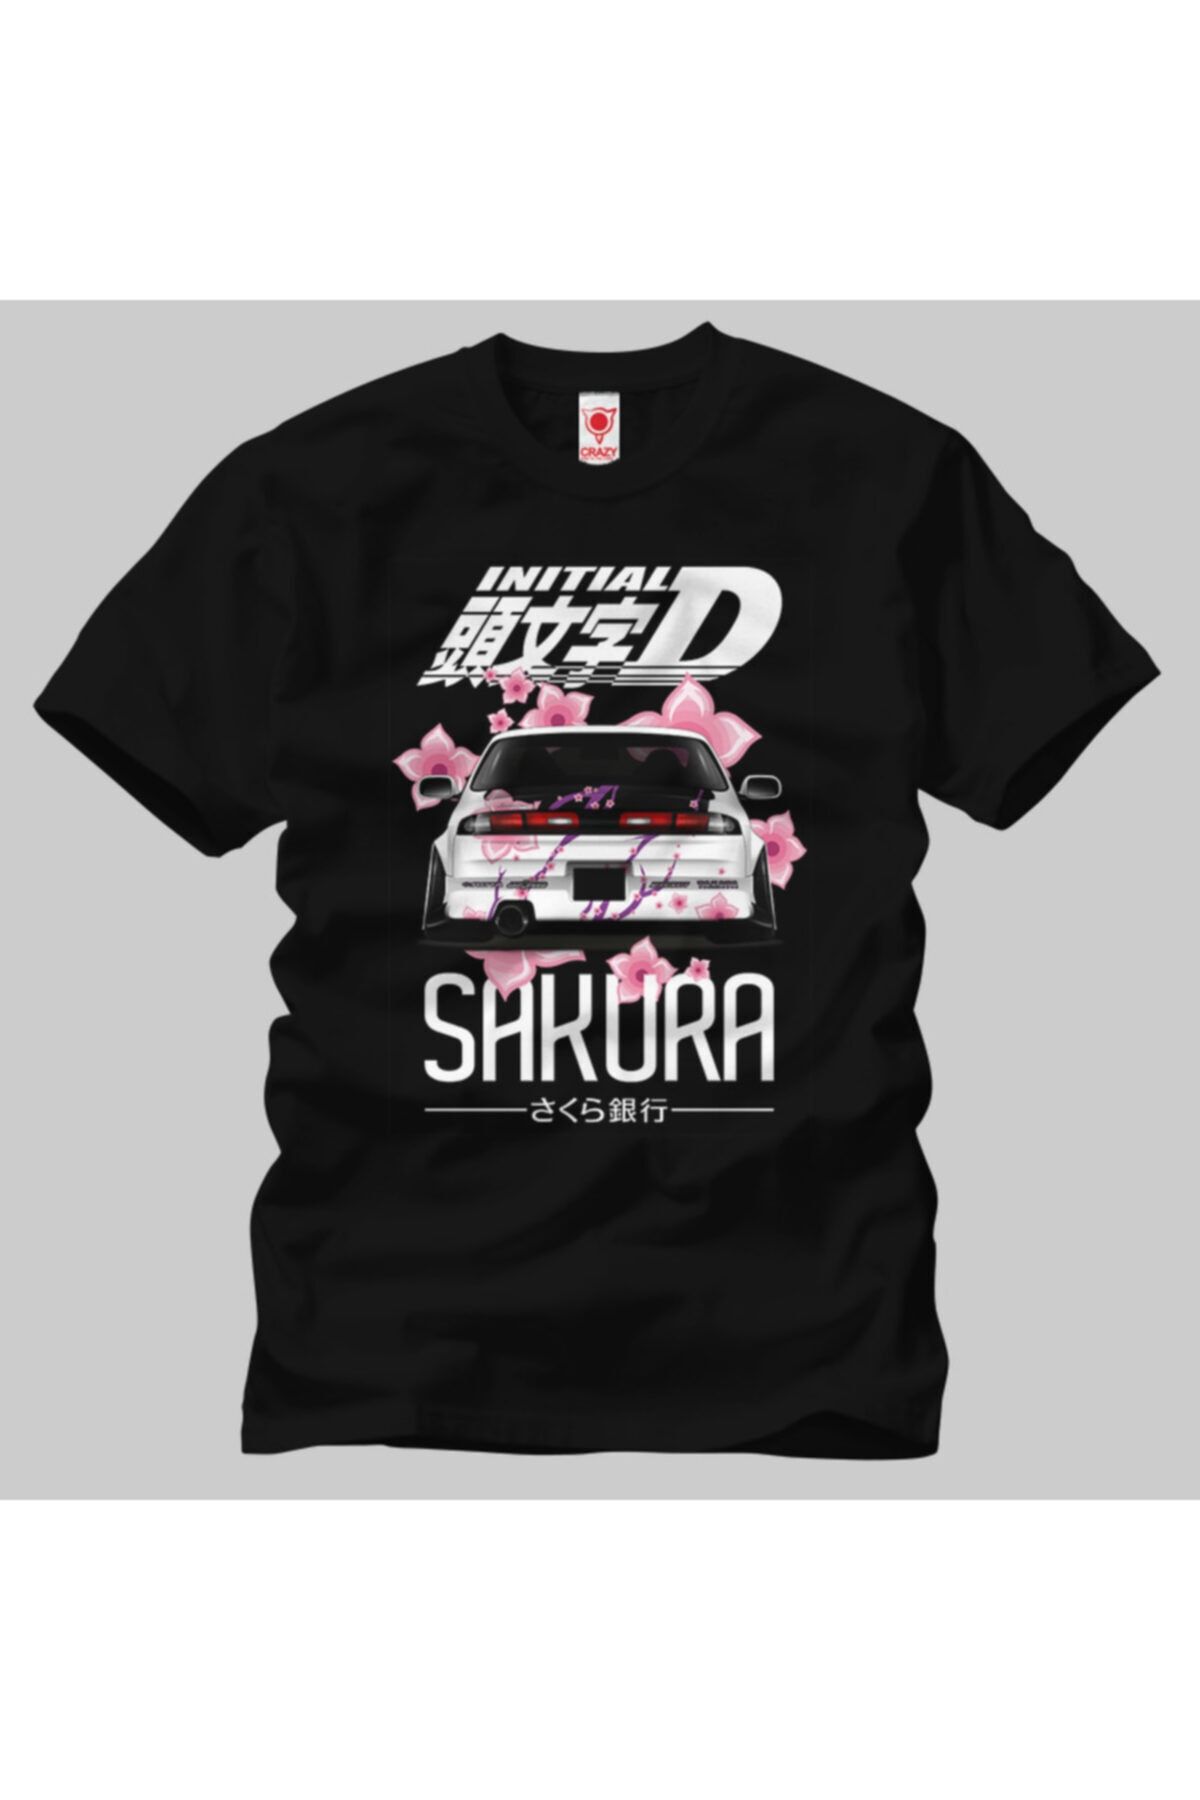 Crazy Initial D Sakura Erkek Tişört